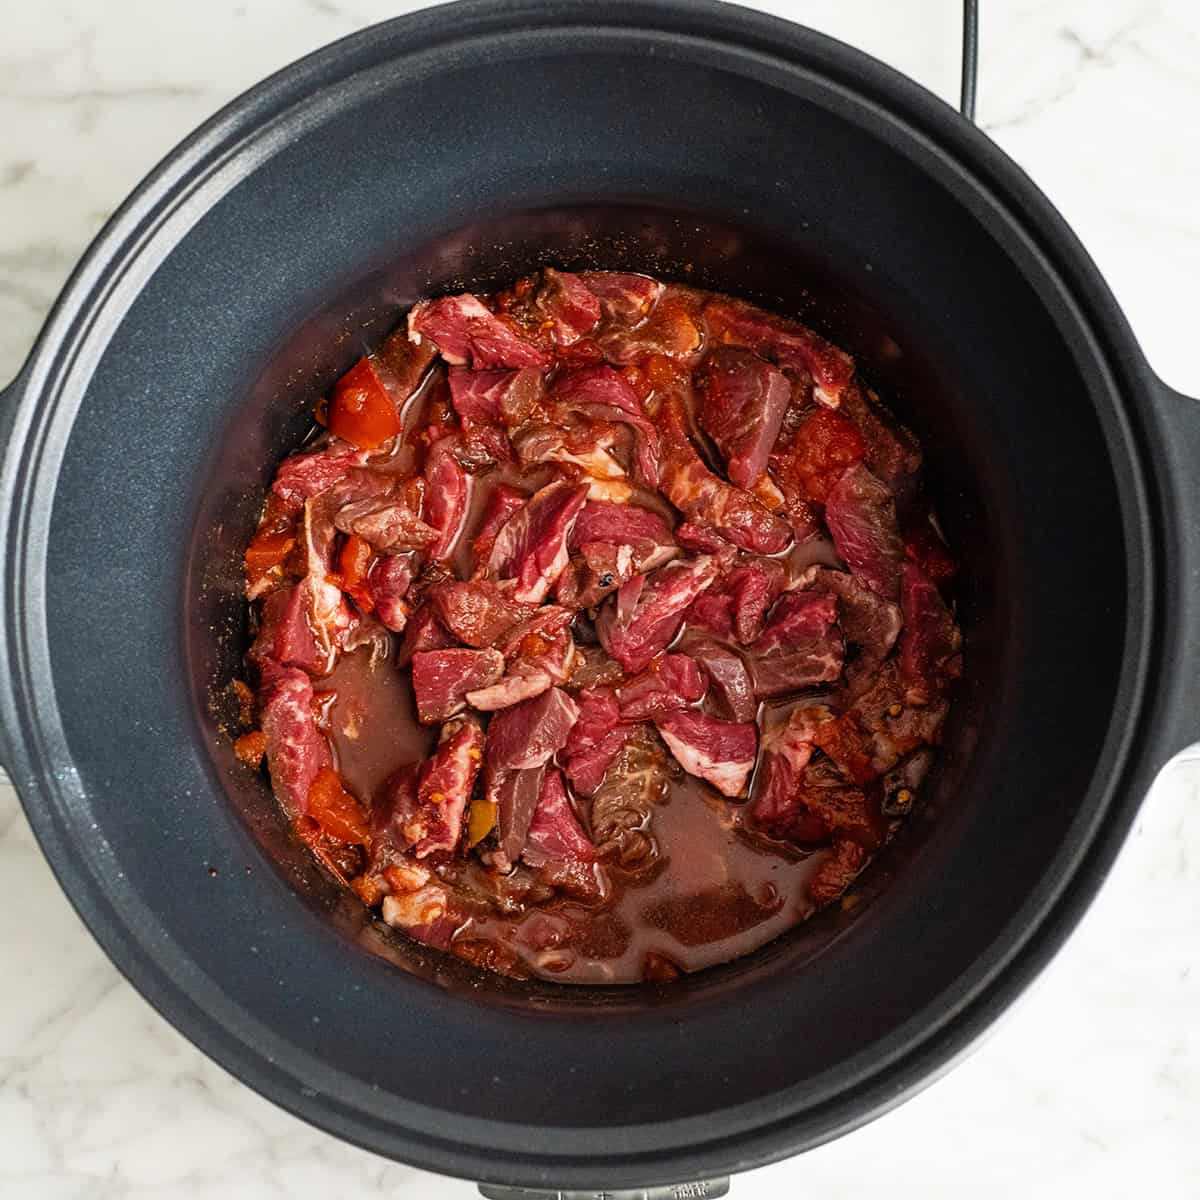 slow cooker pepper steak in a crock pot before cooking